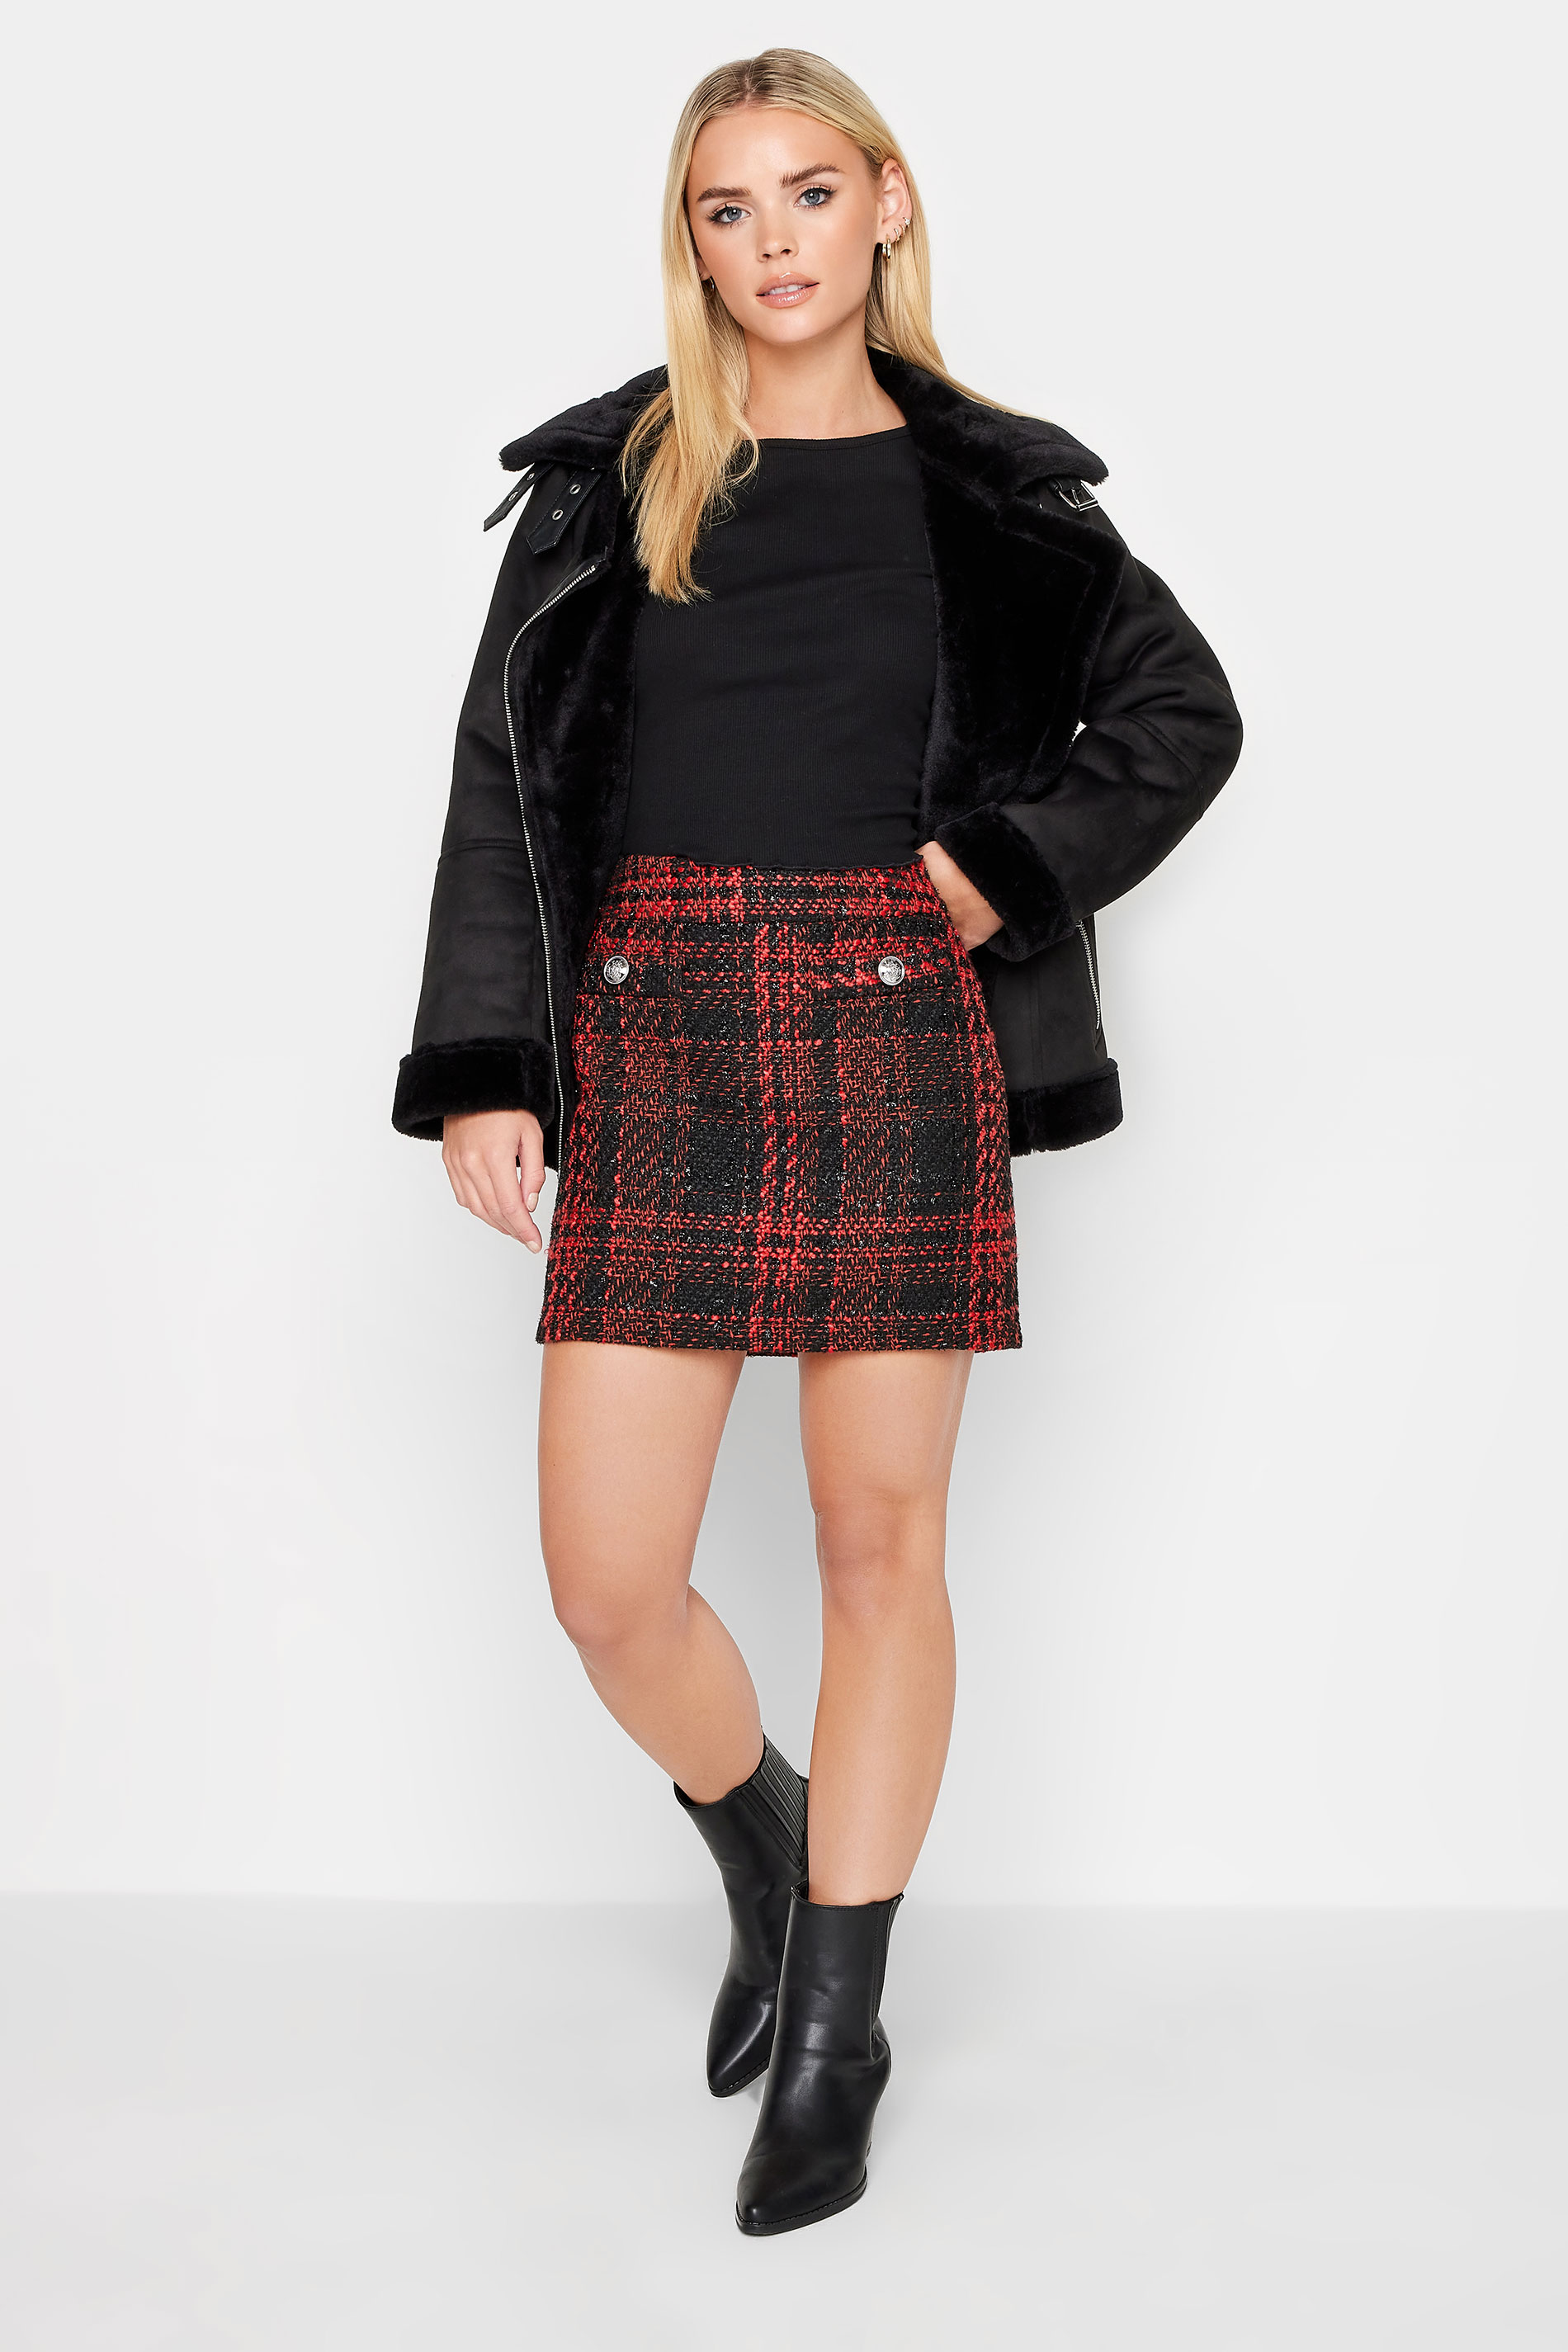 PixieGirl Red & Black Boucle Check Mini Skirt | PixieGirl  3